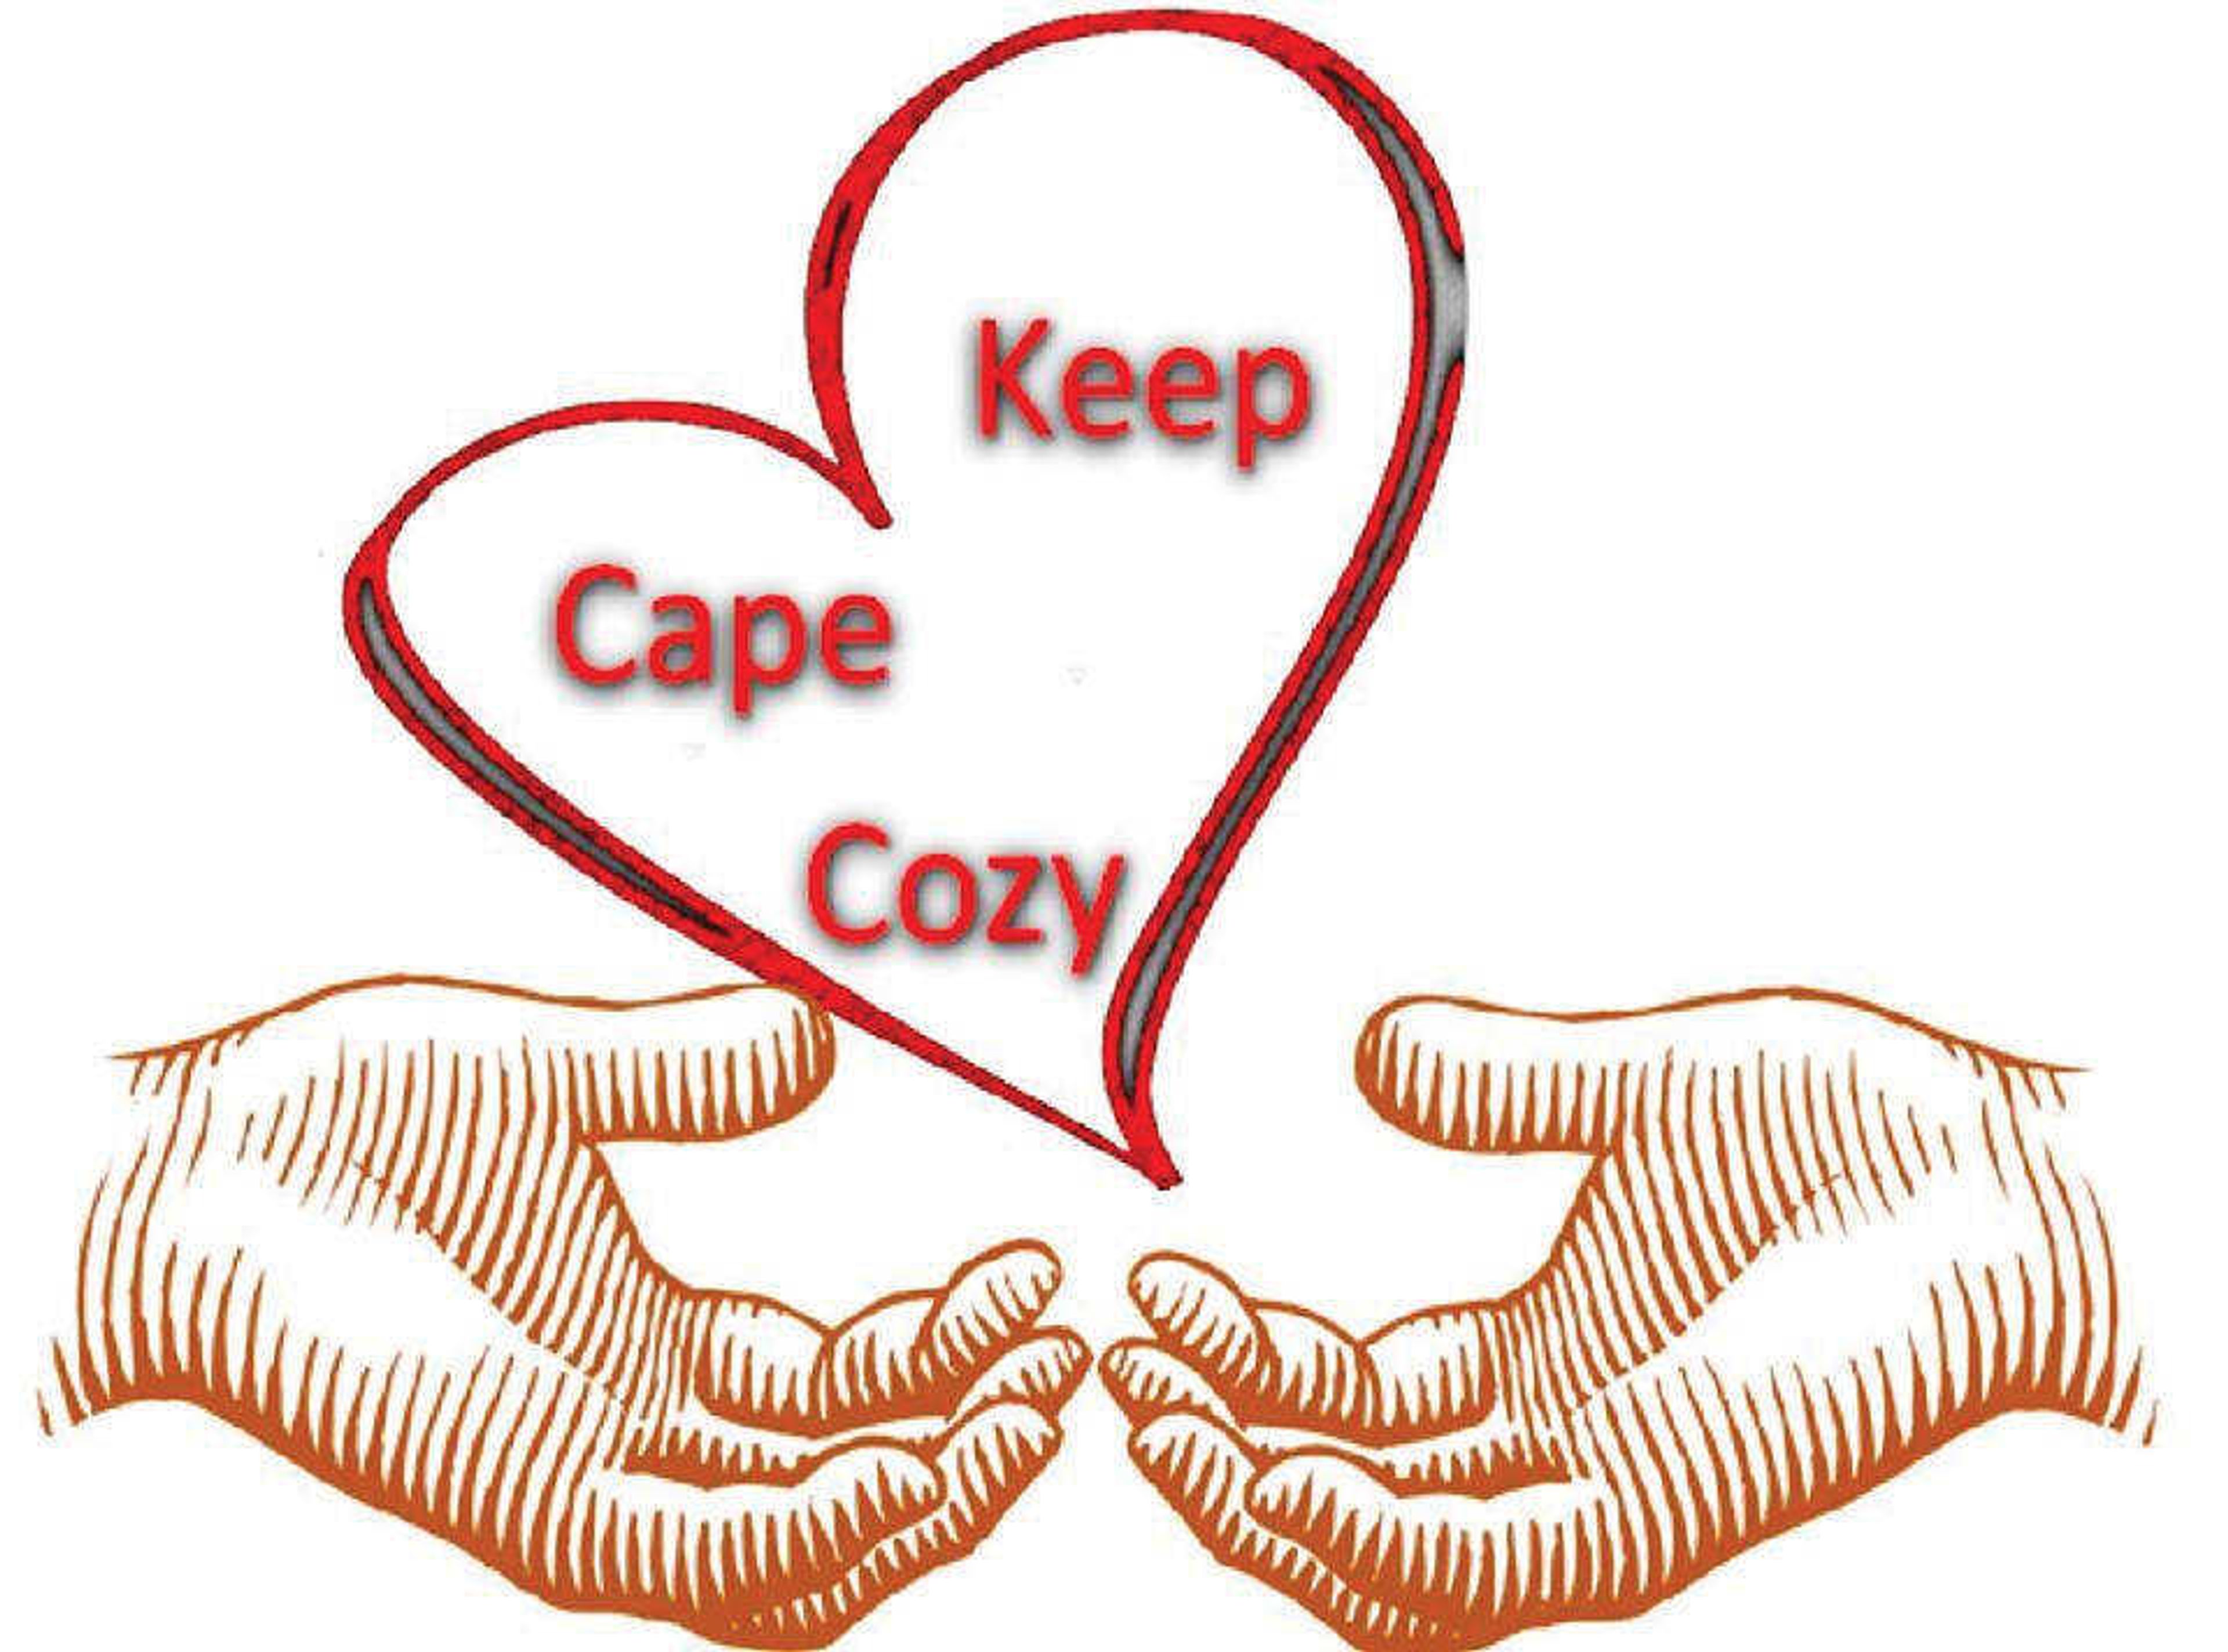 Southeast students create "Keep Cape Cozy" organization through social work class